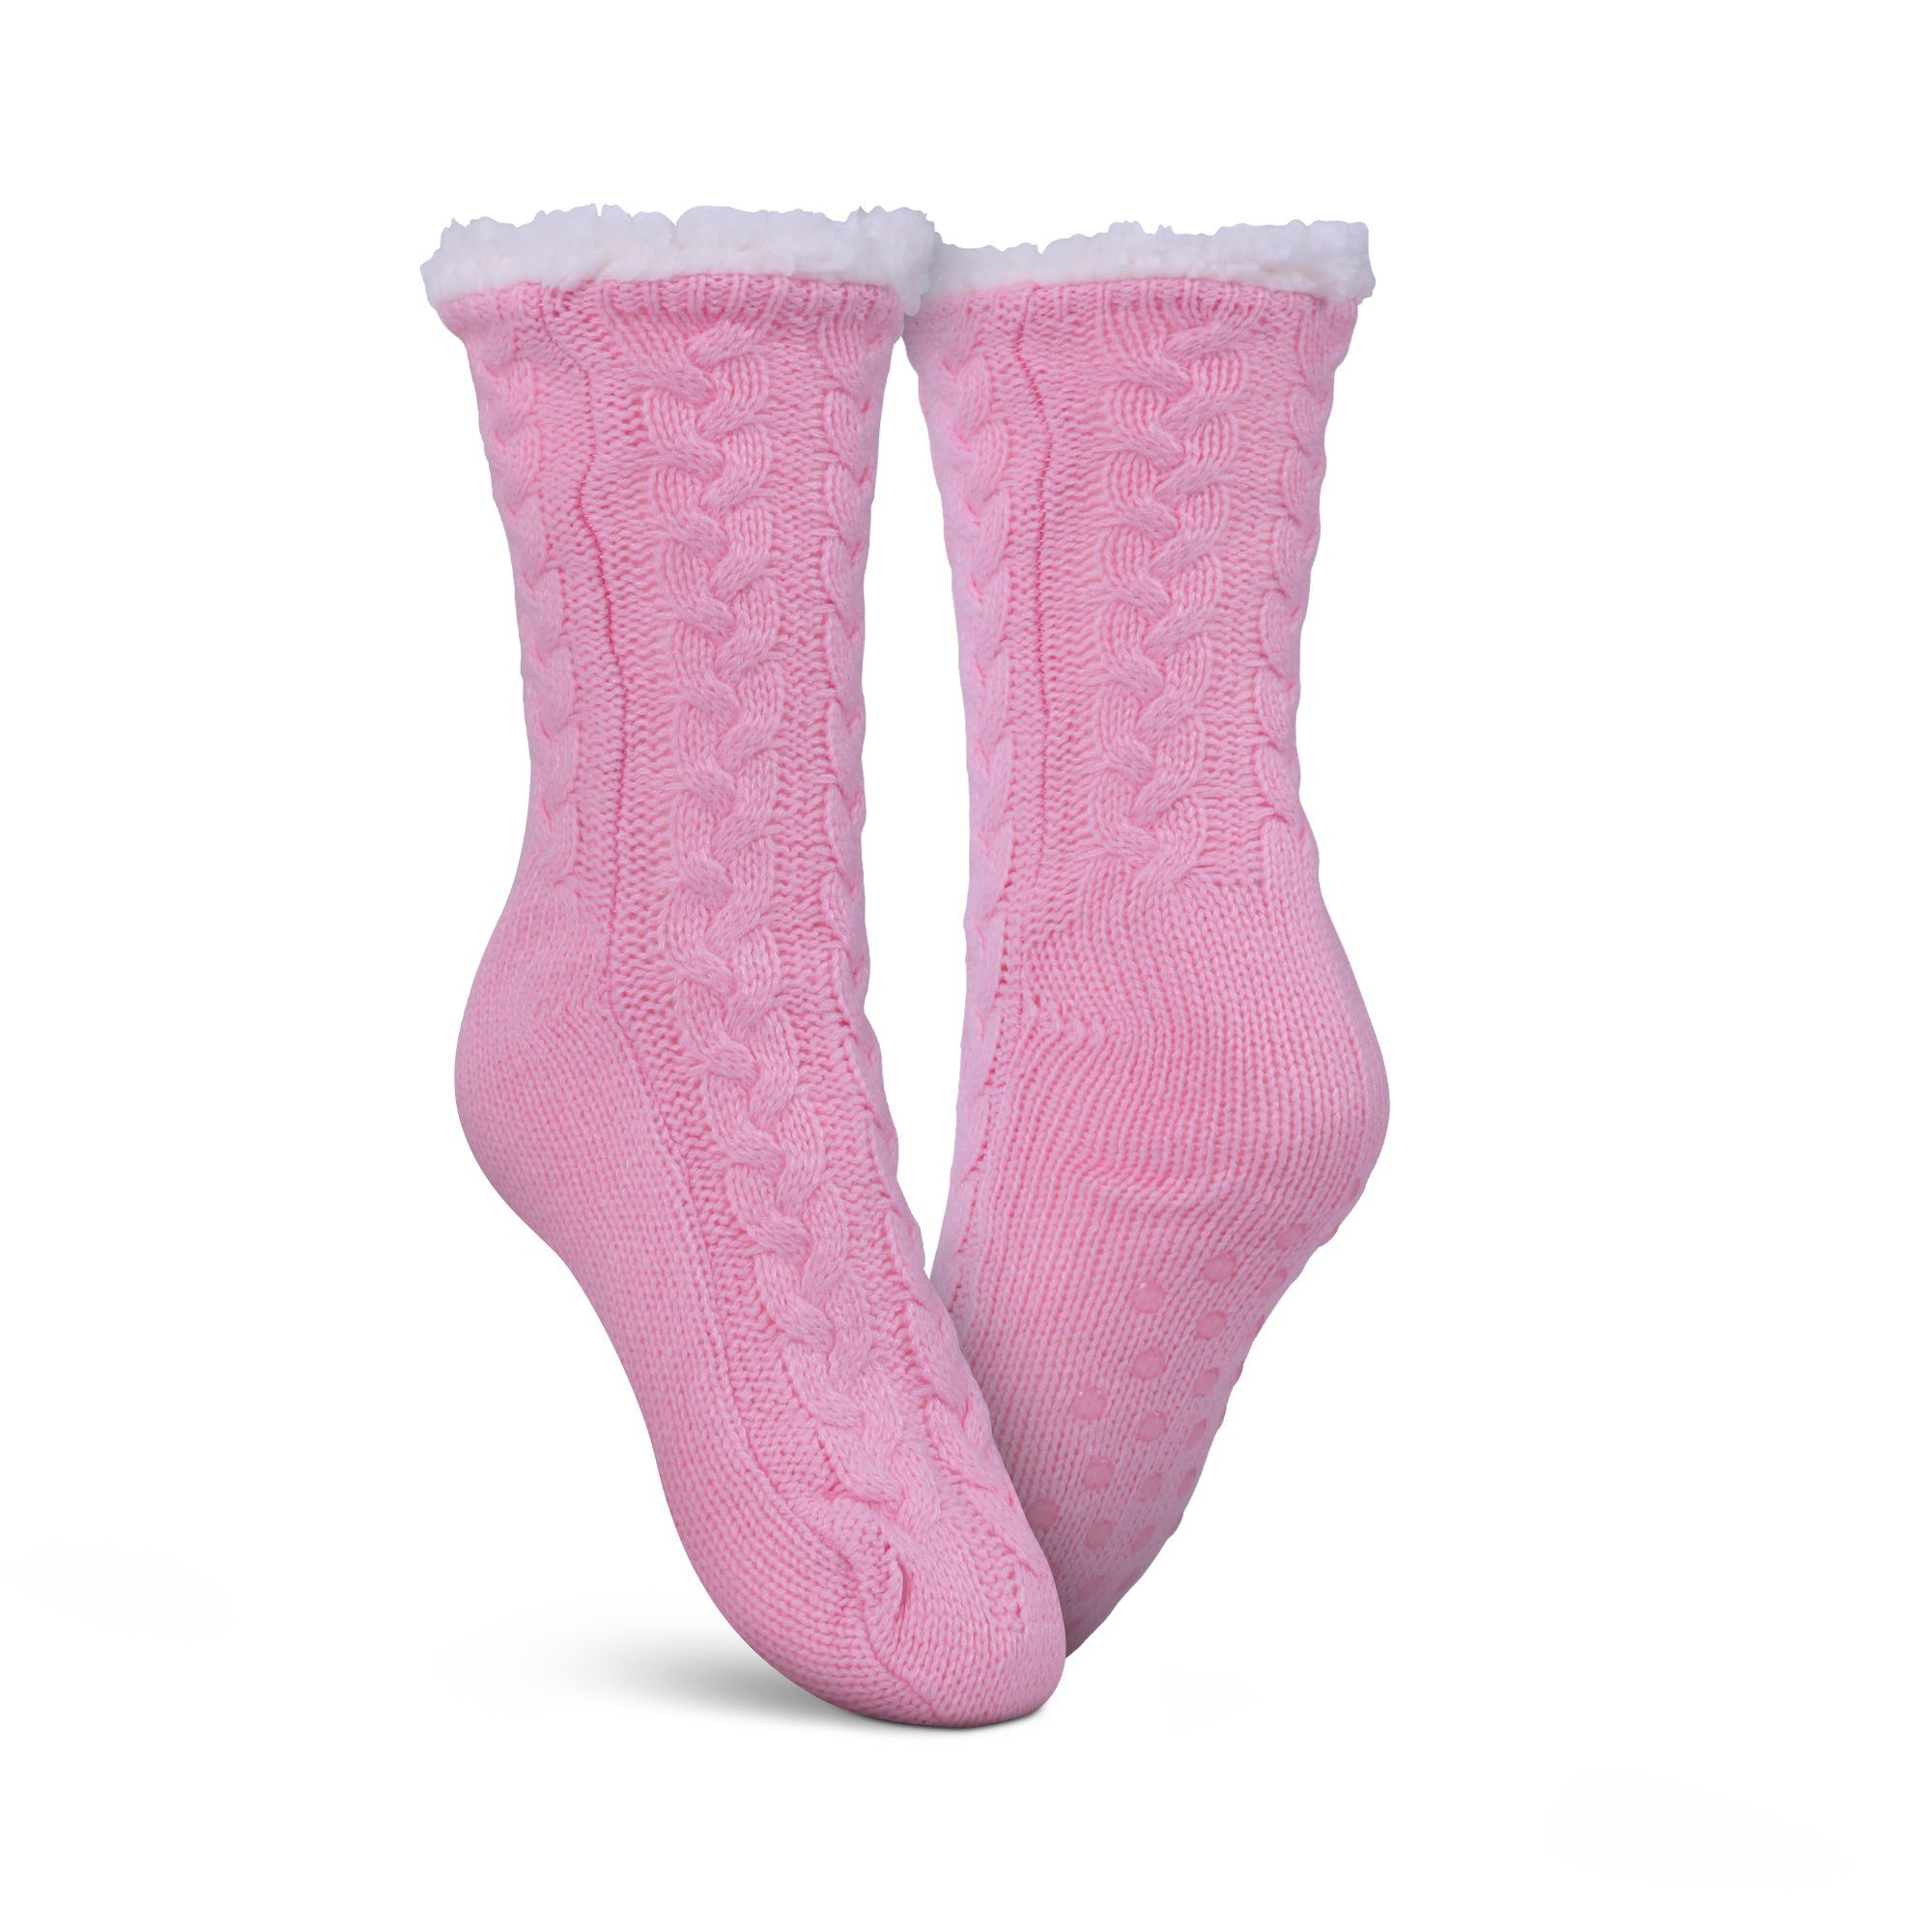 Bestlivings ABS-Socken Hüttensocken 36-42 (1-Paar) Haussocken Stoppersocken mit Teddyfutter, Hüttensocken plüschig Socken Pink ( Zopfmuster )